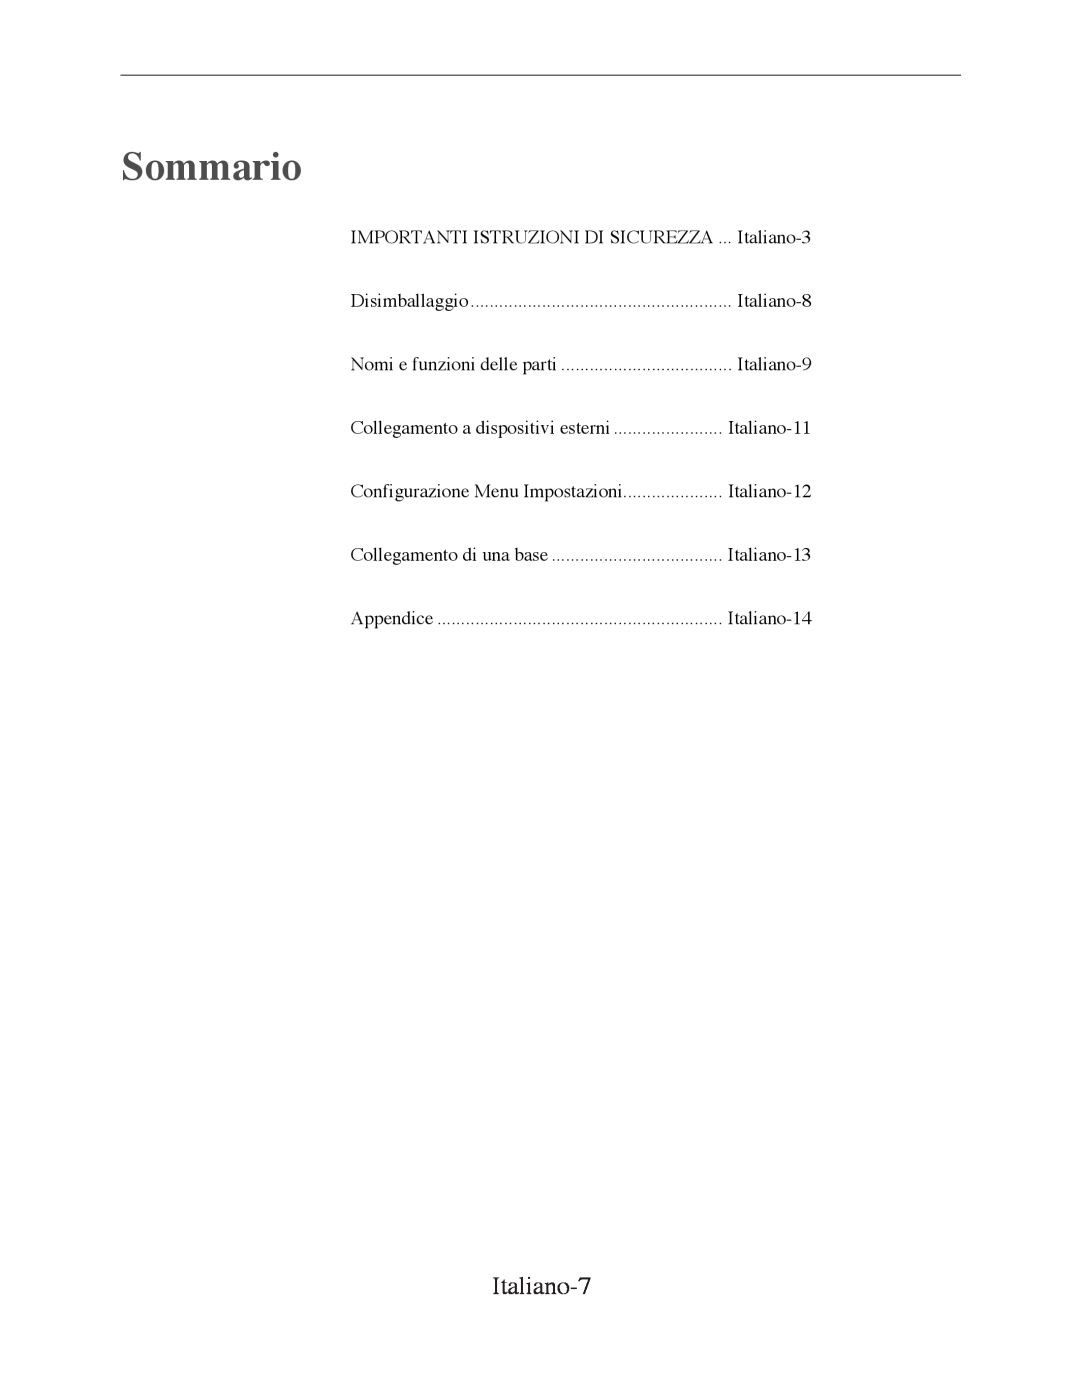 Samsung SMT-170P manual Sommario, Italiano-7 